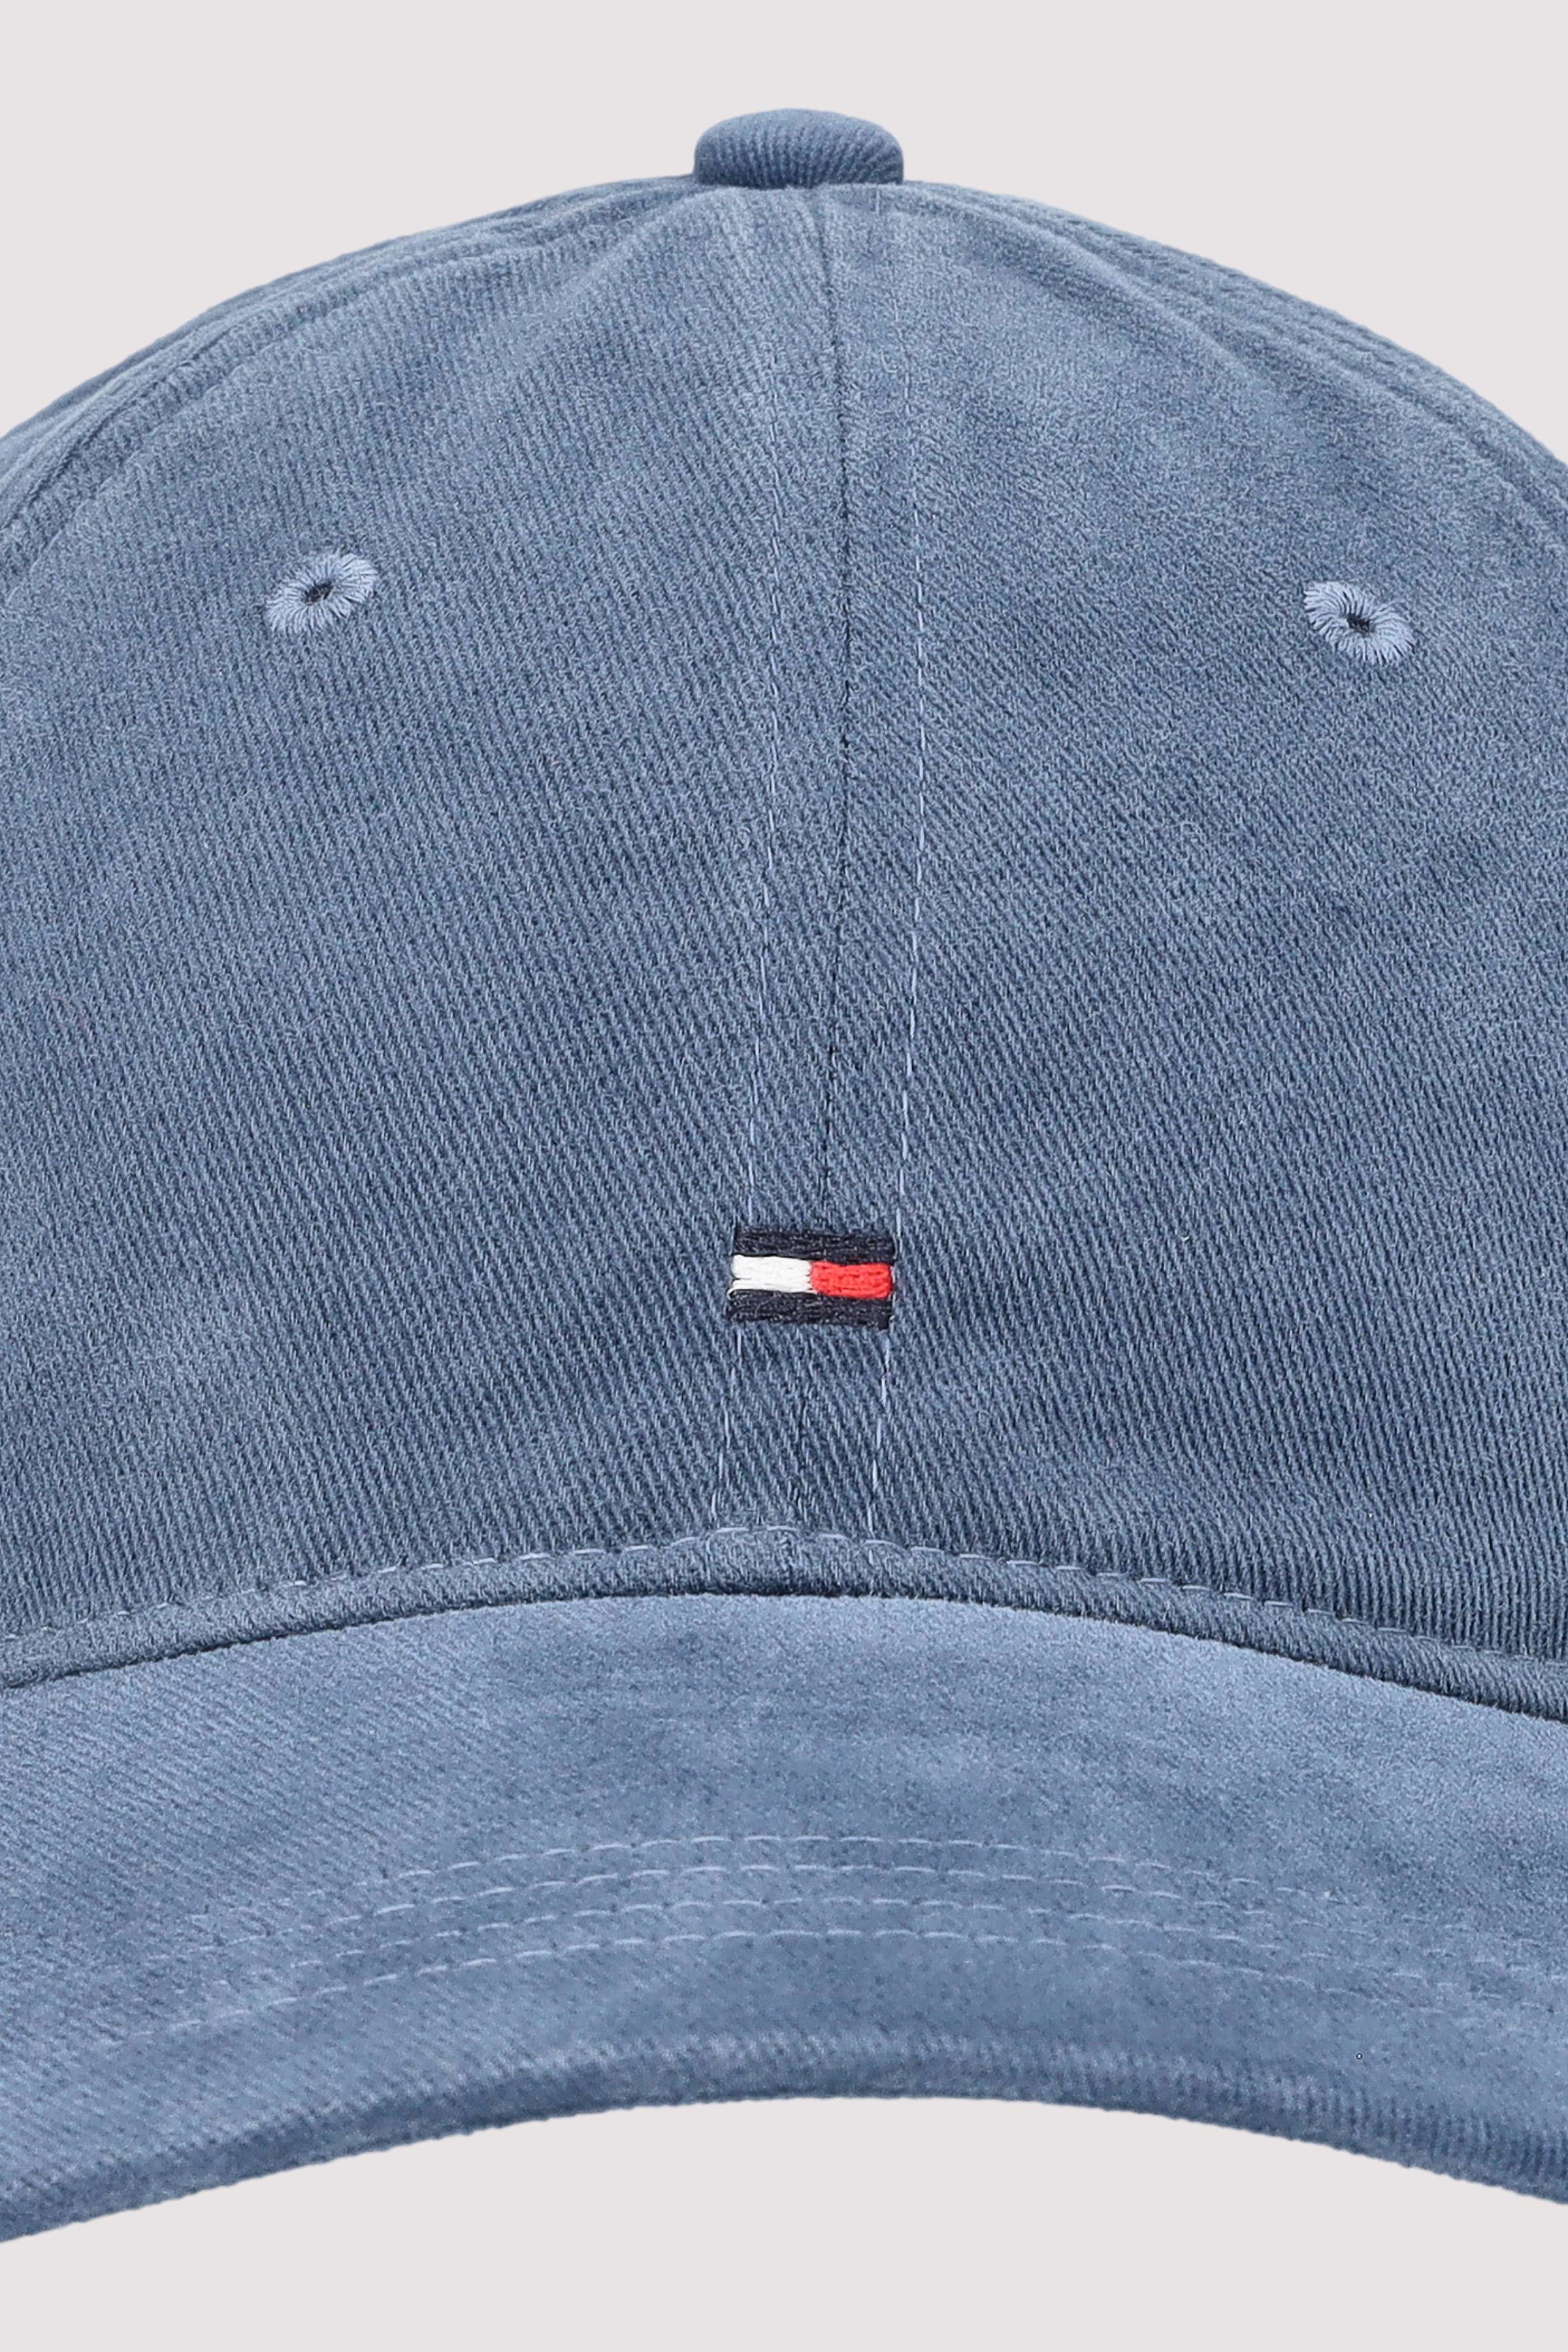 TH FLAG '85 SOFT 6 PANEL CAP